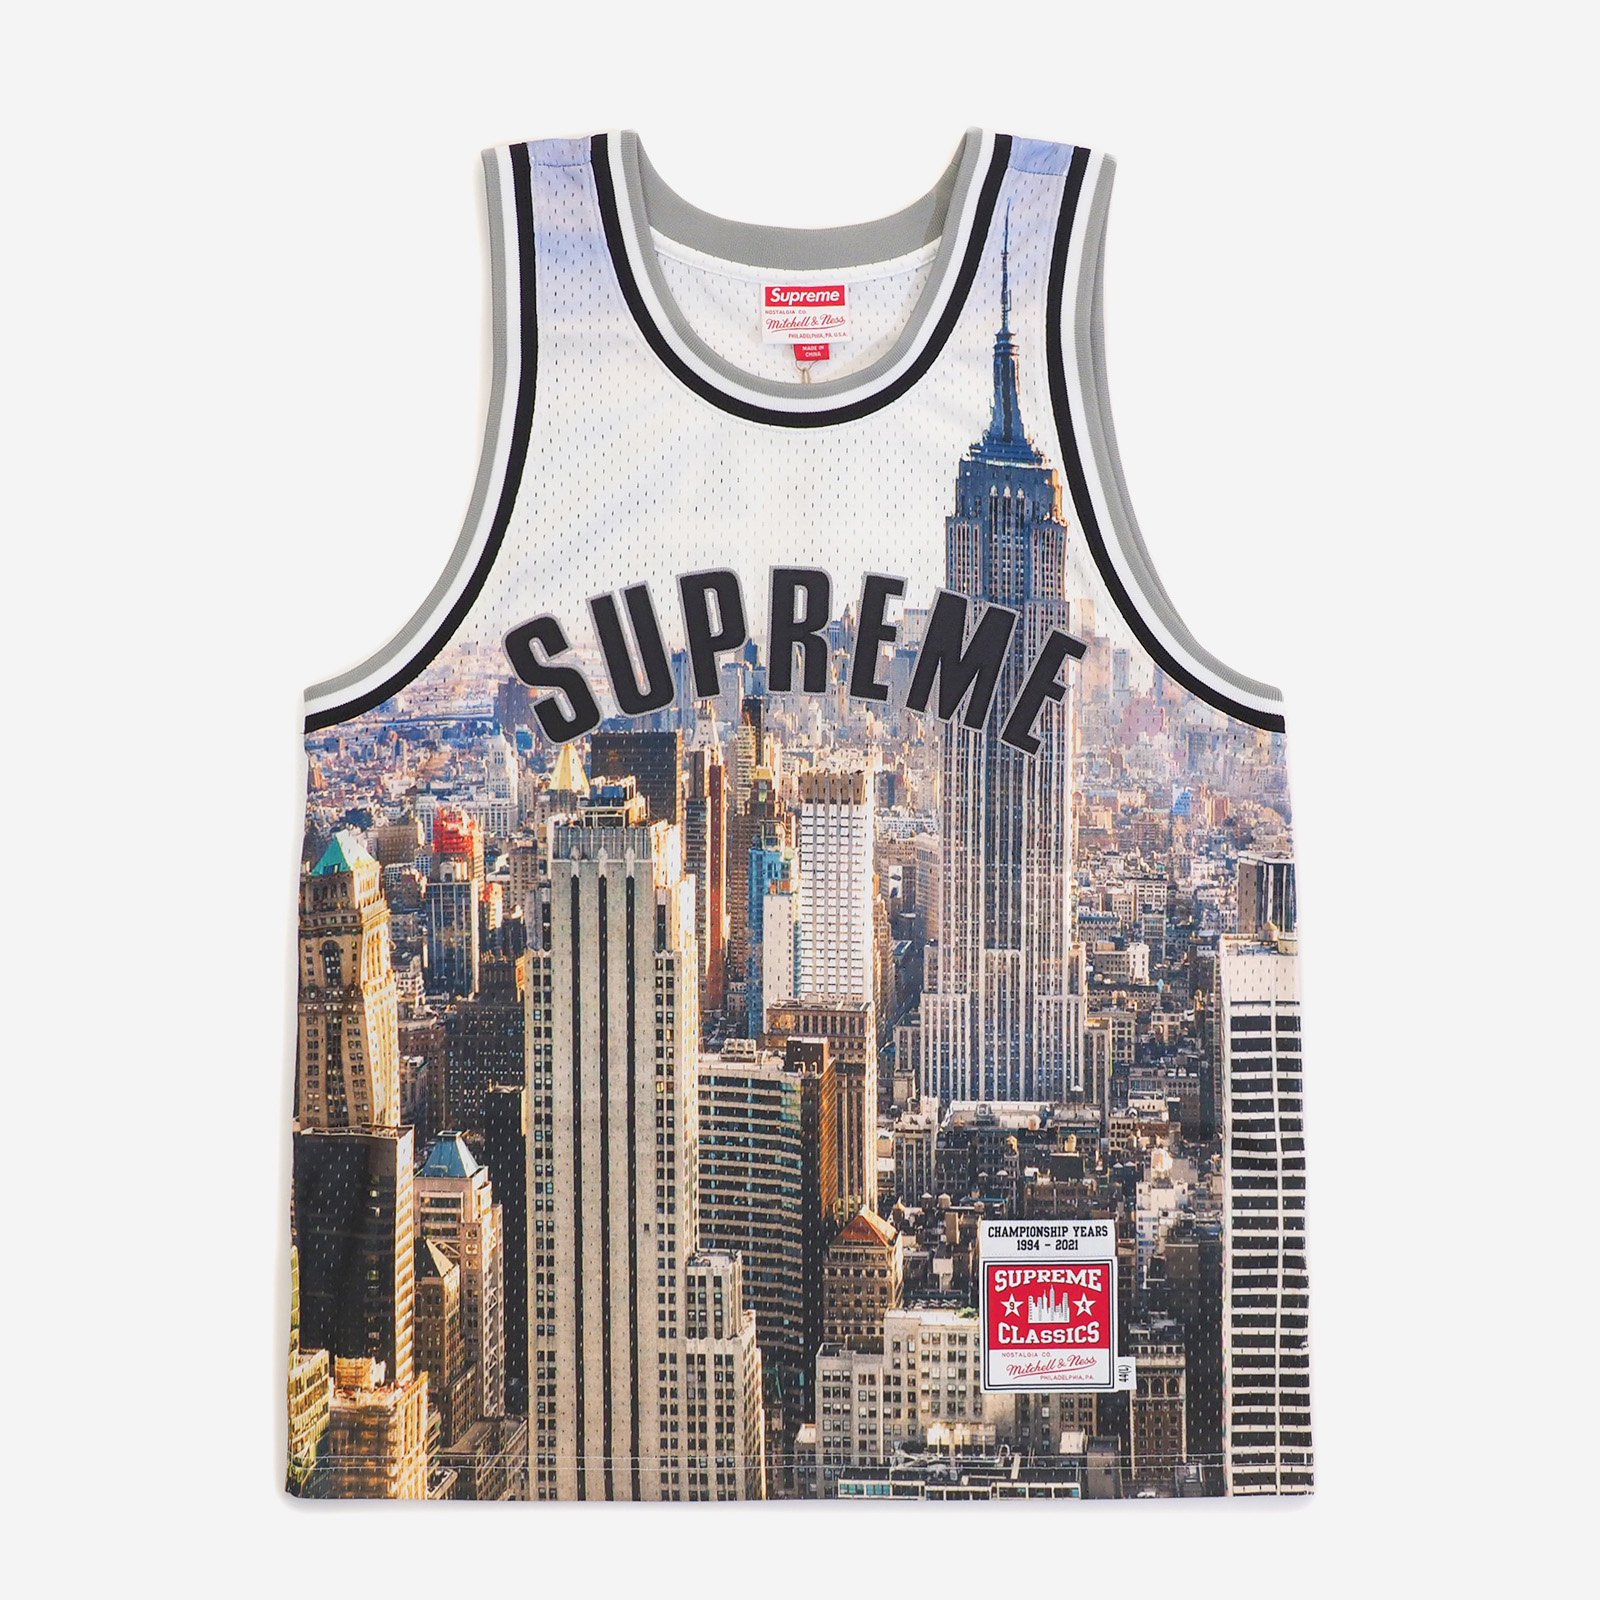 Supreme/Mitchell & Ness Basketball Jersey - ParkSIDER